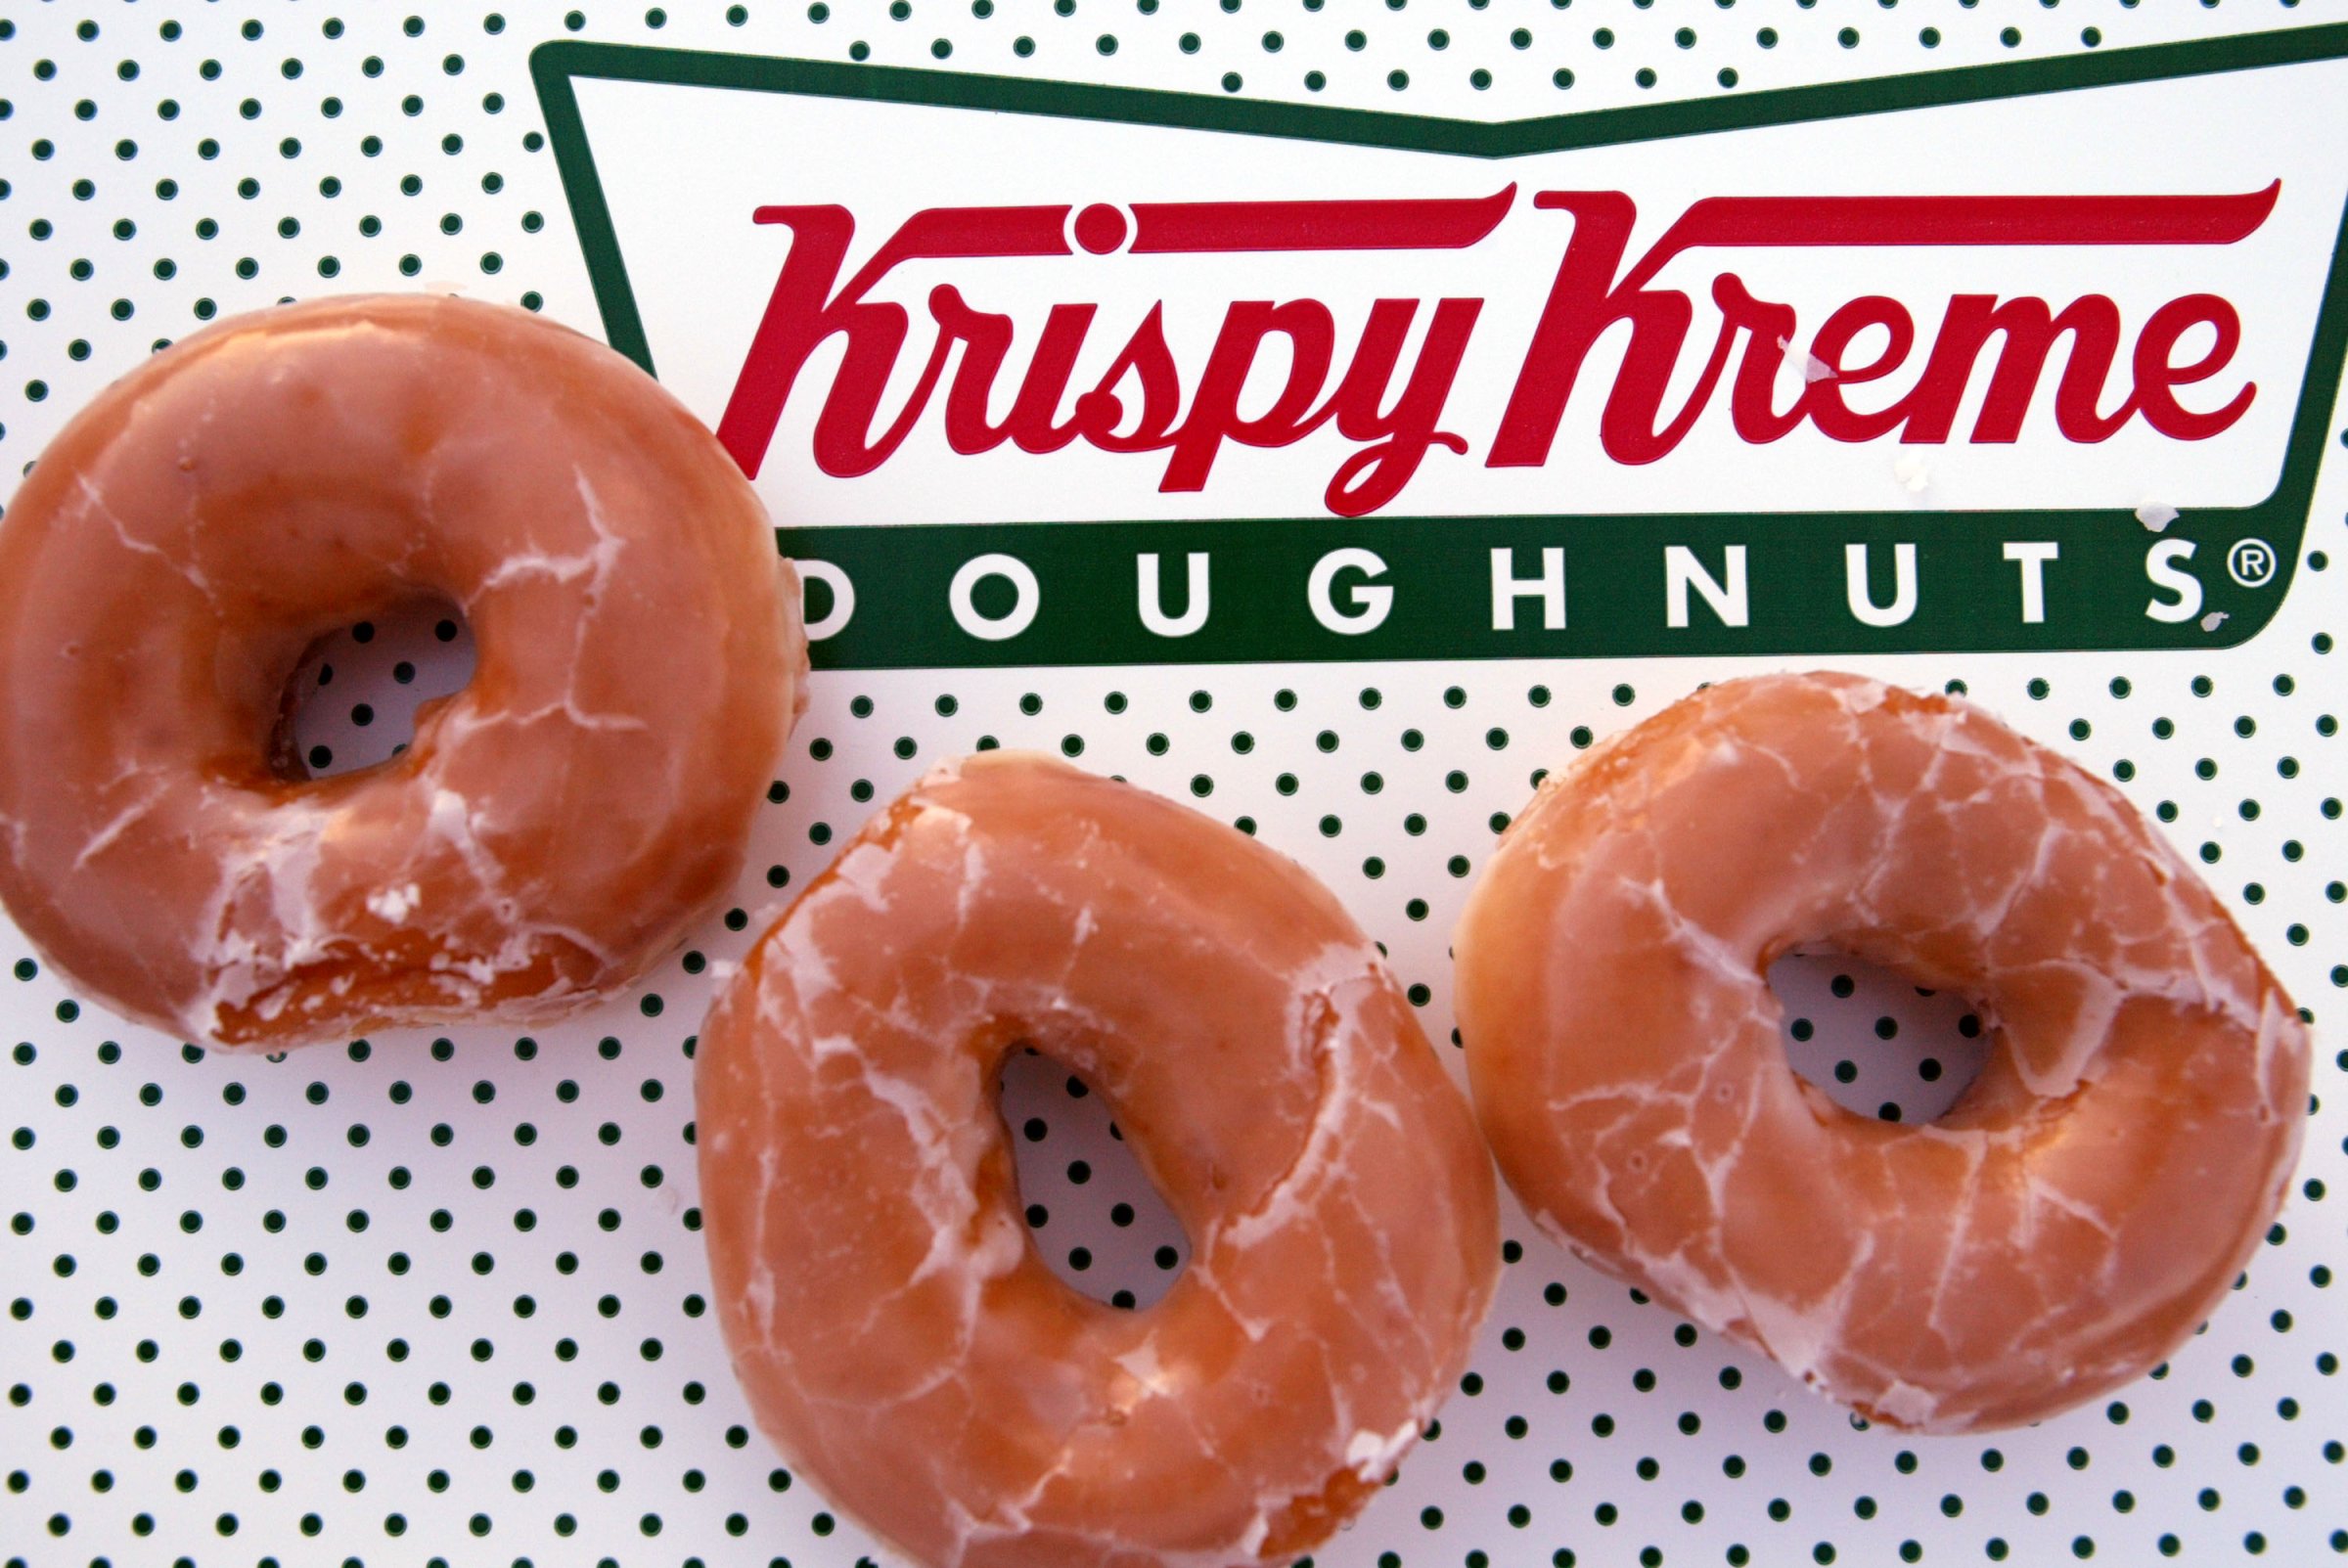 Glazed Krispy Kreme doughnuts are seen May 17, 2004 in Miami, Florida.